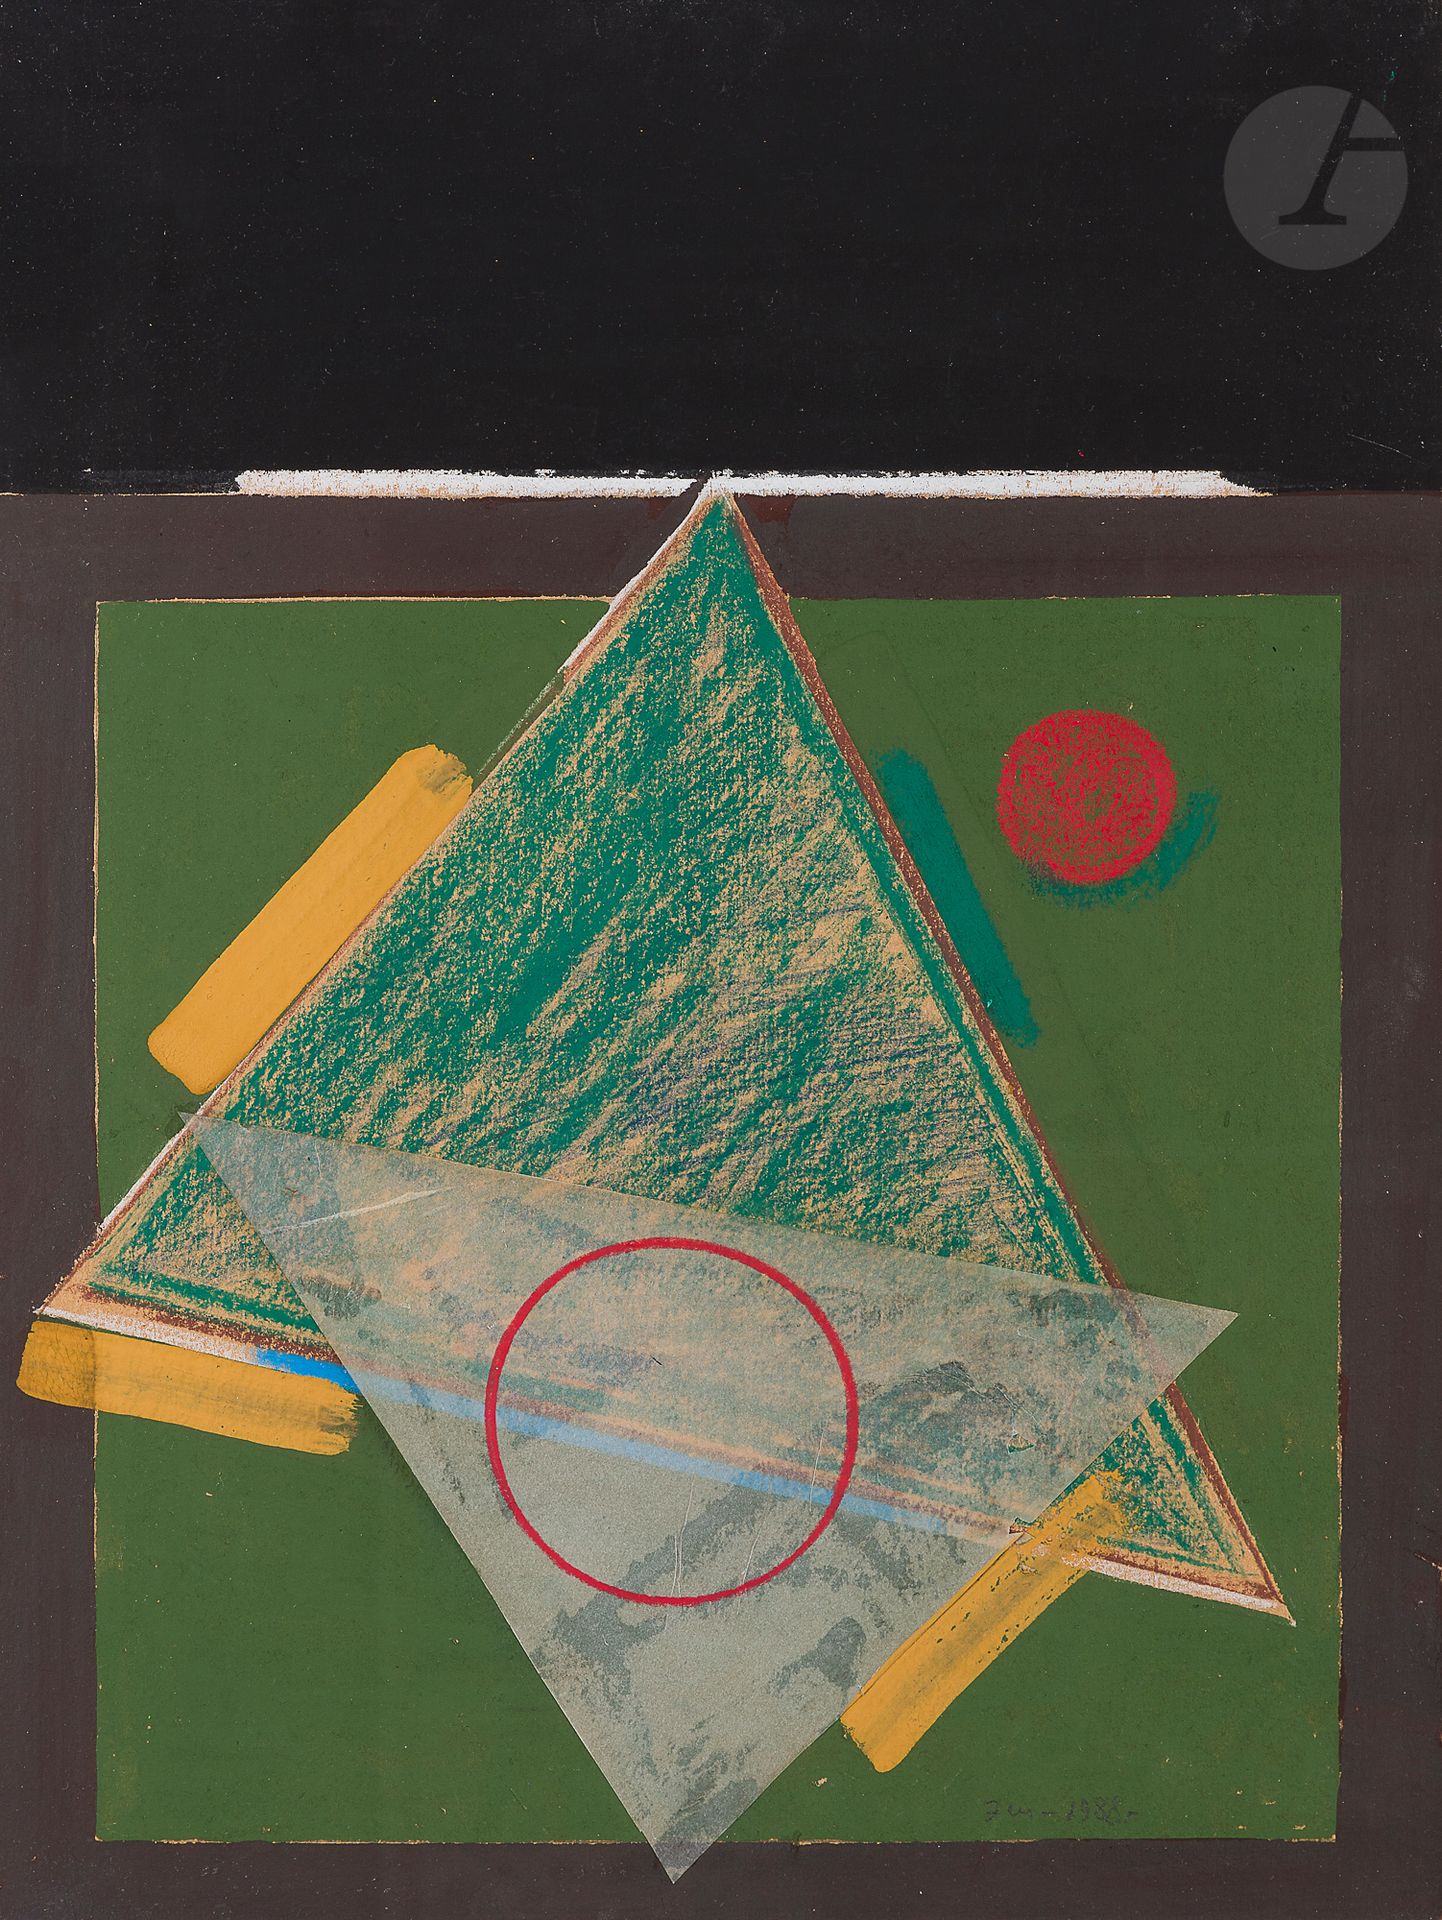 Null Eduard Arkadievich STEINBERG
(1937-2012) 
Disegno geometrico con due triang&hellip;